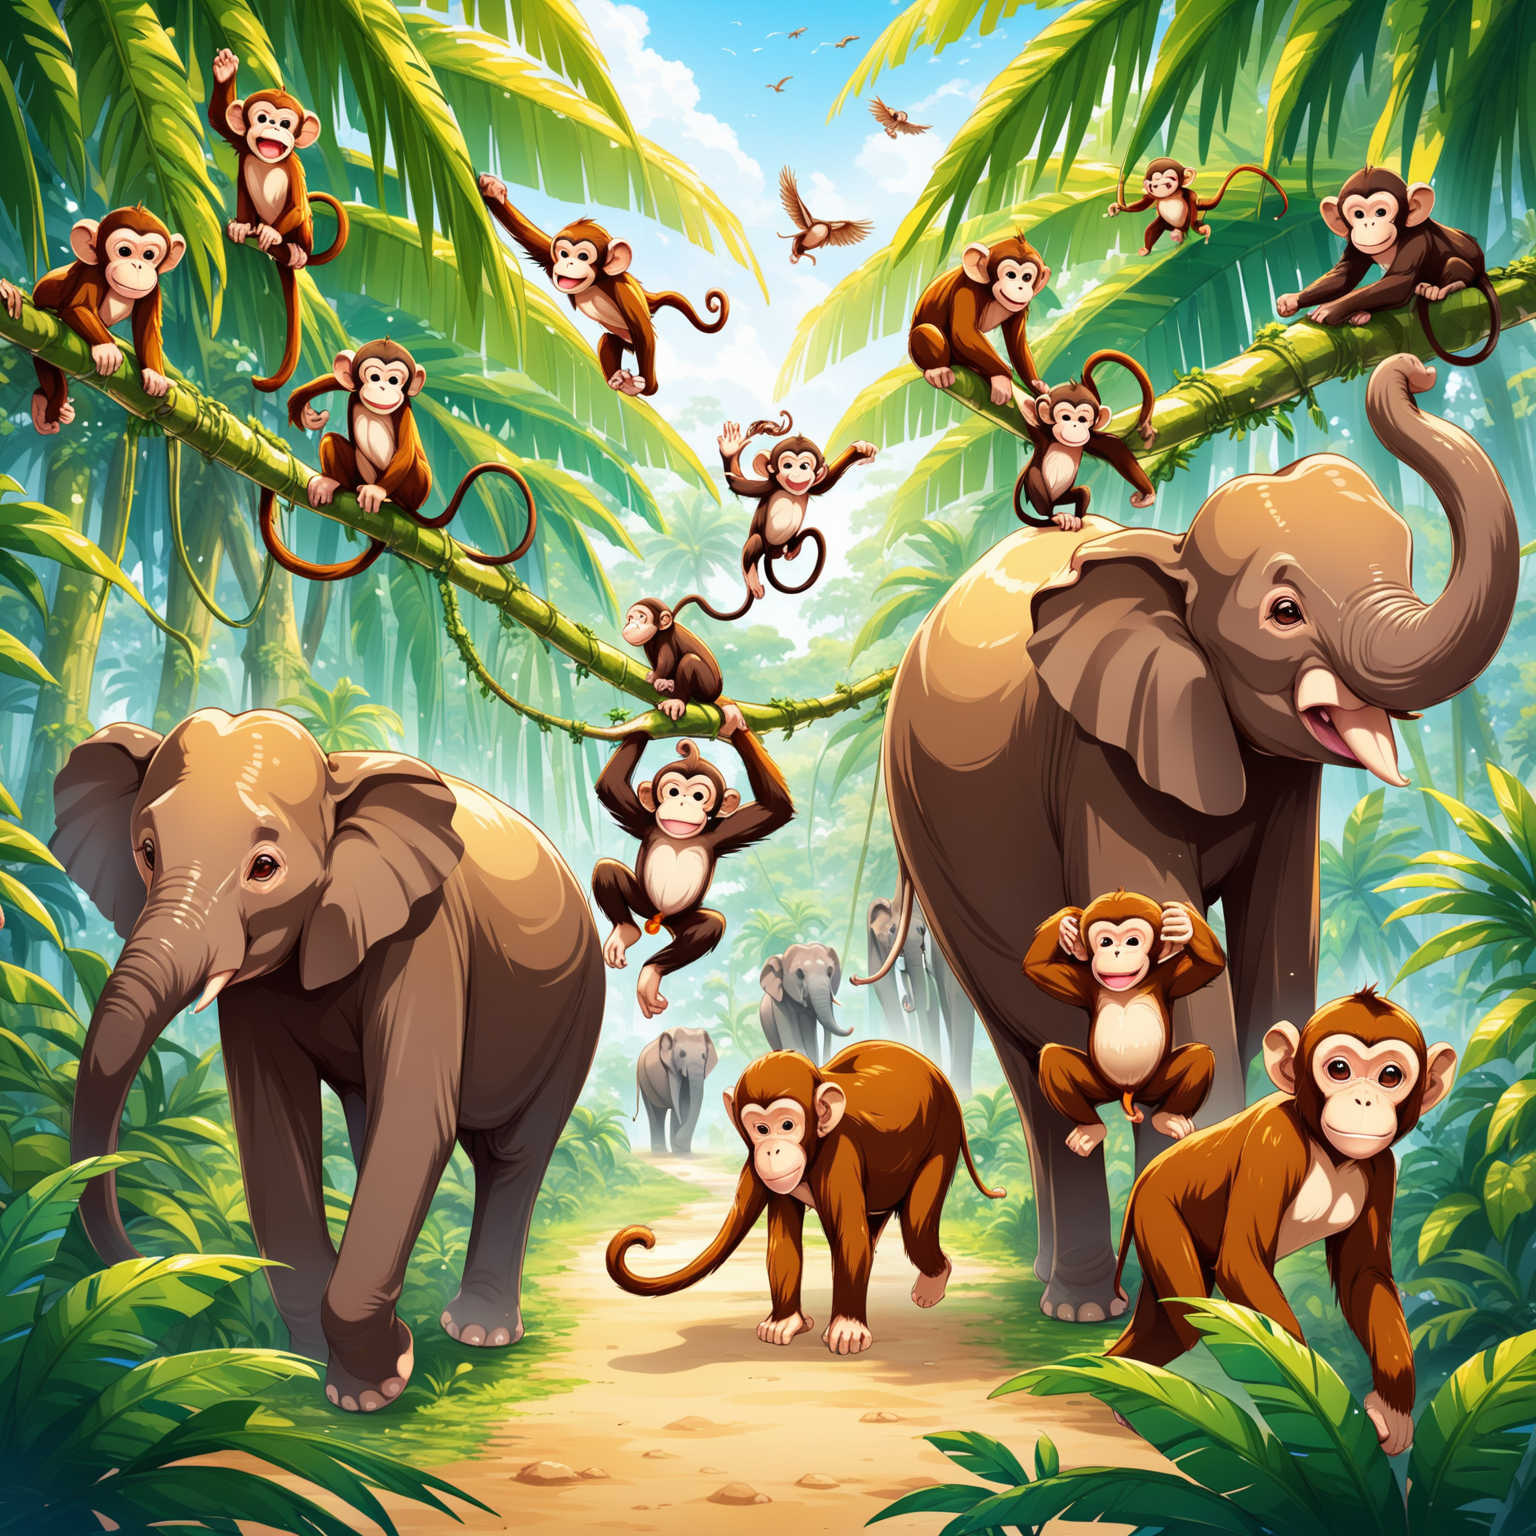 Exotic Jungle Safari Encounter with Monkeys and Elephants